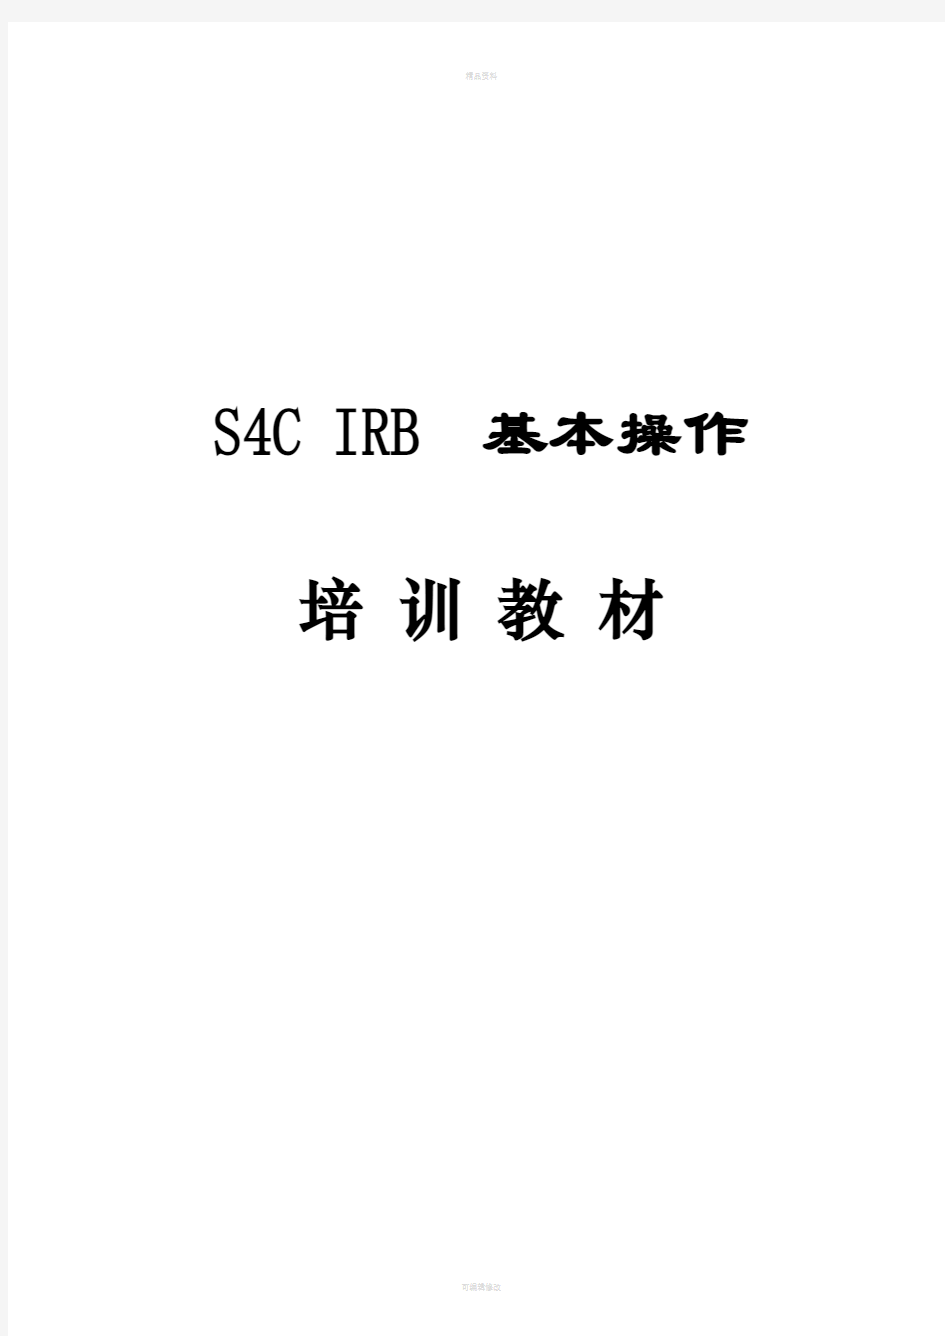 ABB机器人操作培训(S4C-IRB)-说明书-完整版